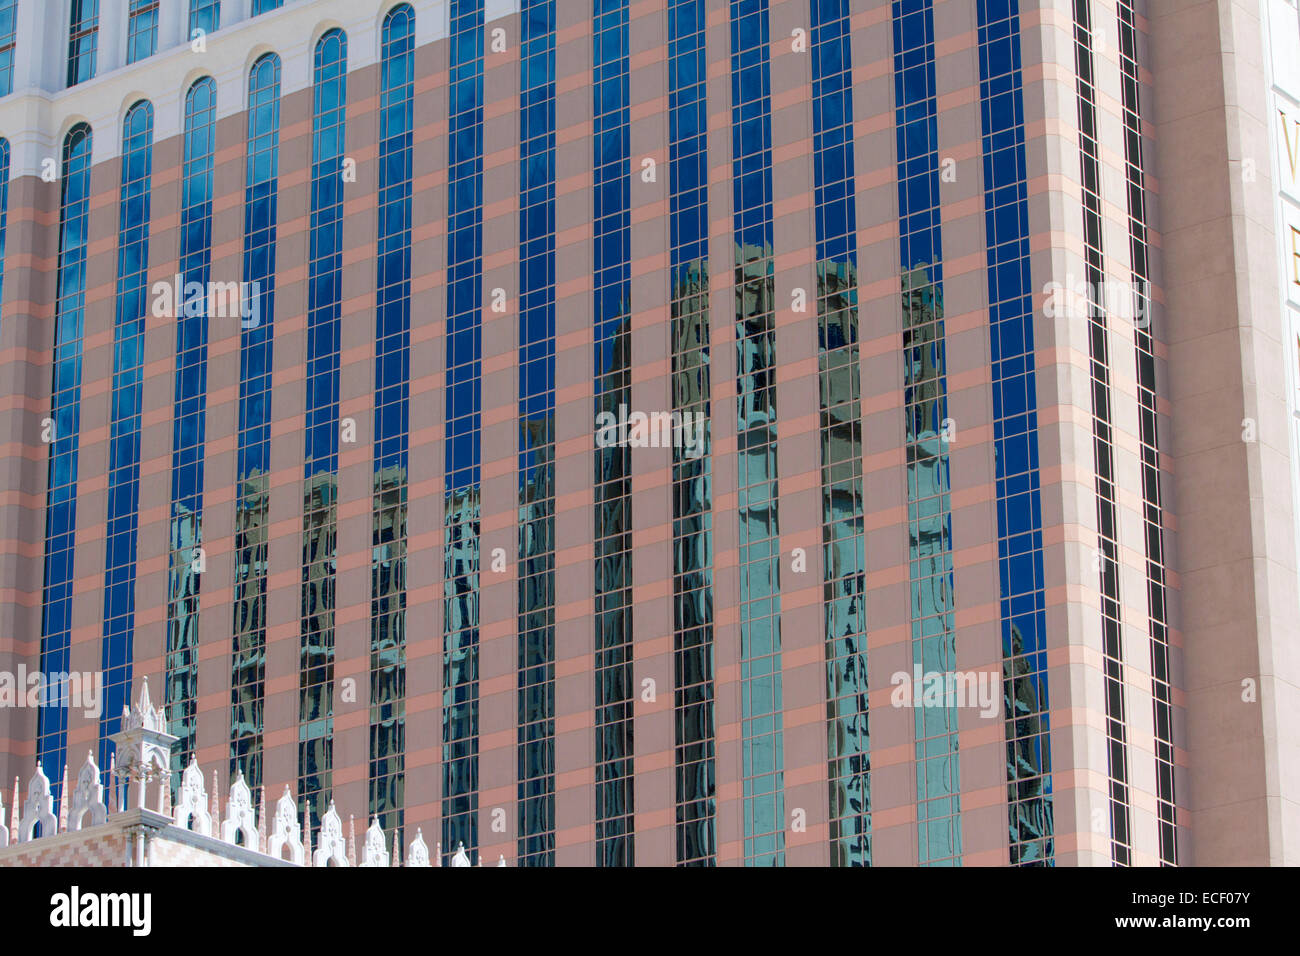 Reflections in windows of the Venetian Resort Hotel Casino along Las Vegas Strip, Nevada, USA in July Stock Photo